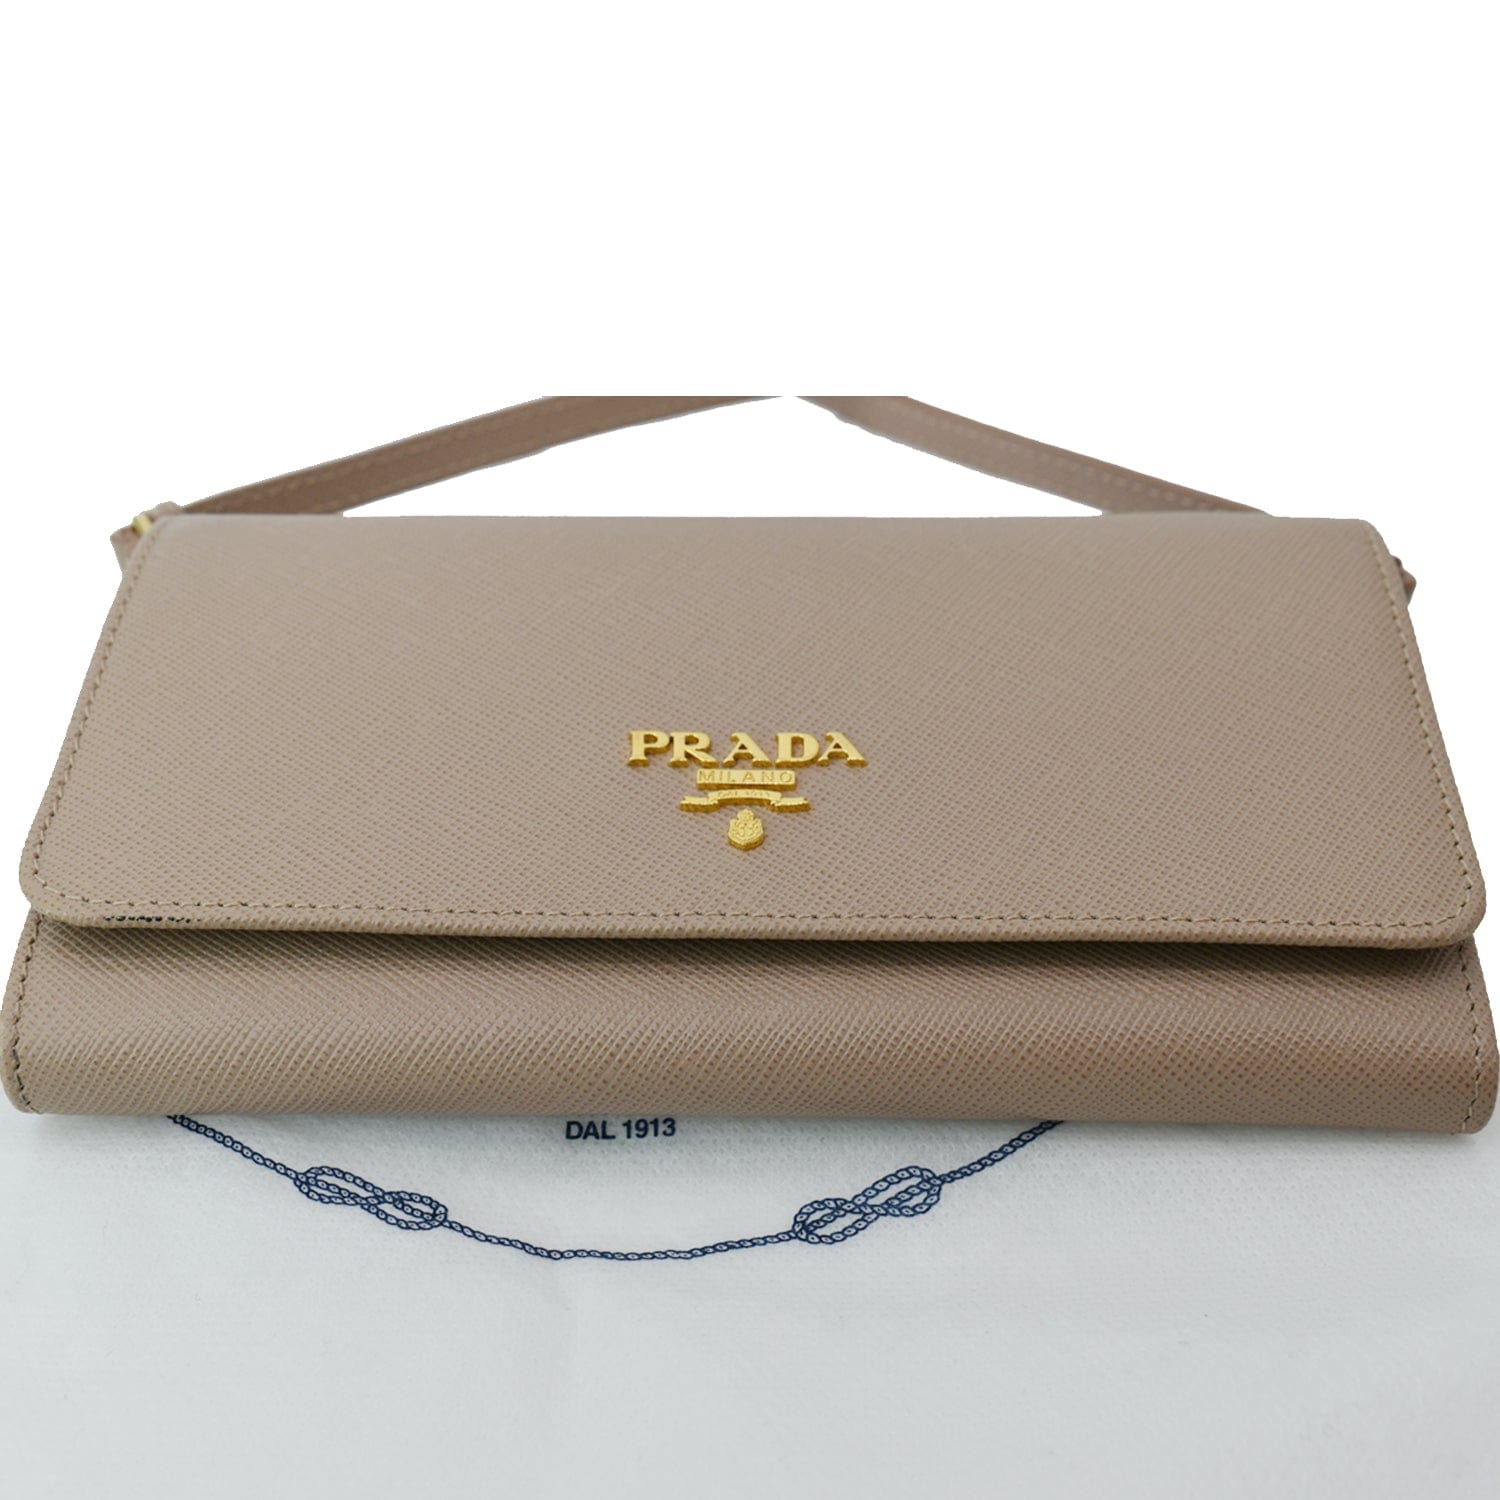 Prada Mini Saffiano Leather Crossbody Bag